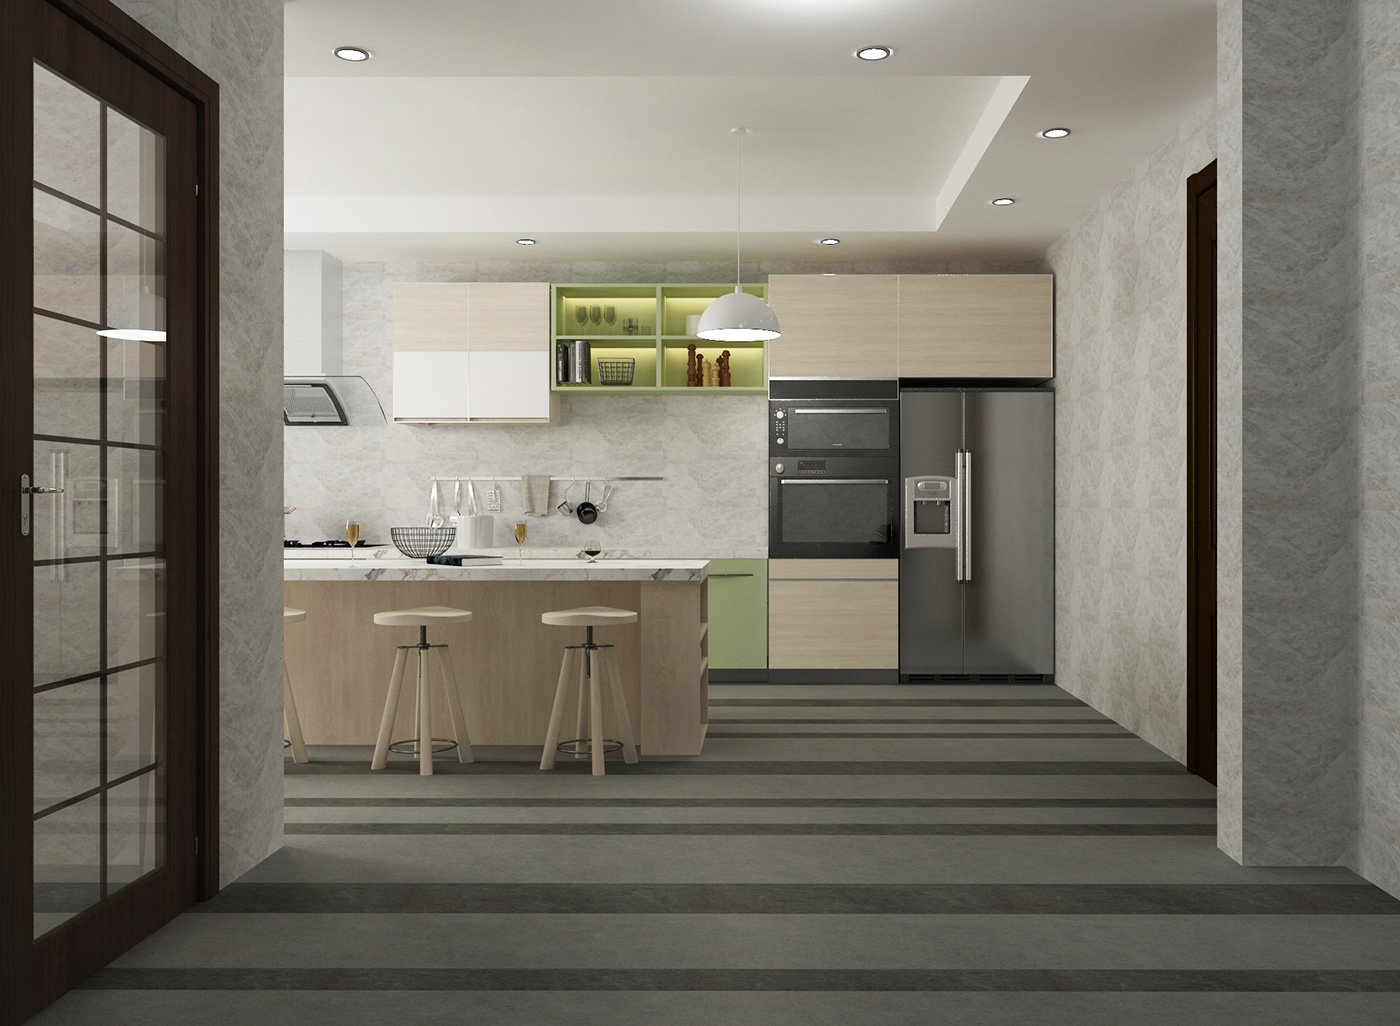 Interior kitchen contemporary vray render homedesign 3dmax